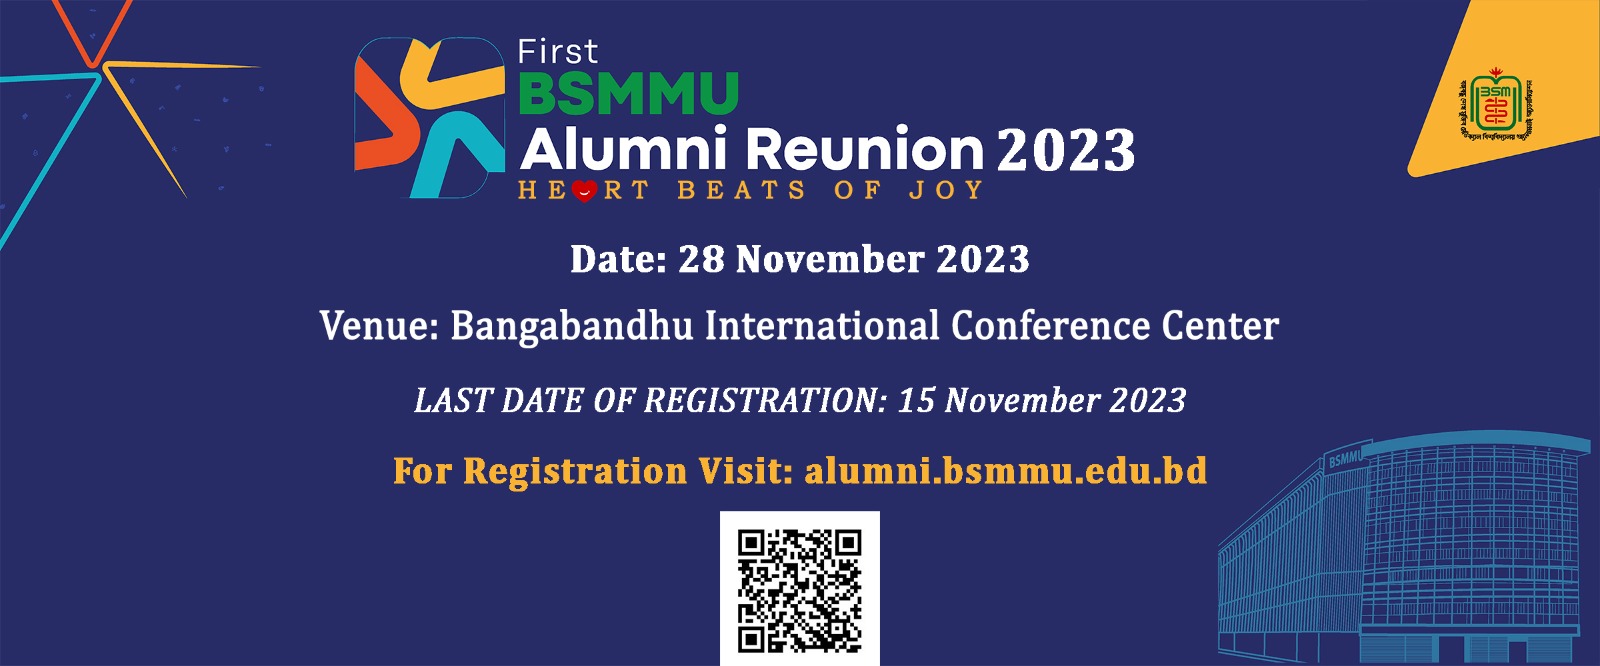 BSMMU Alumni Reunion 2023